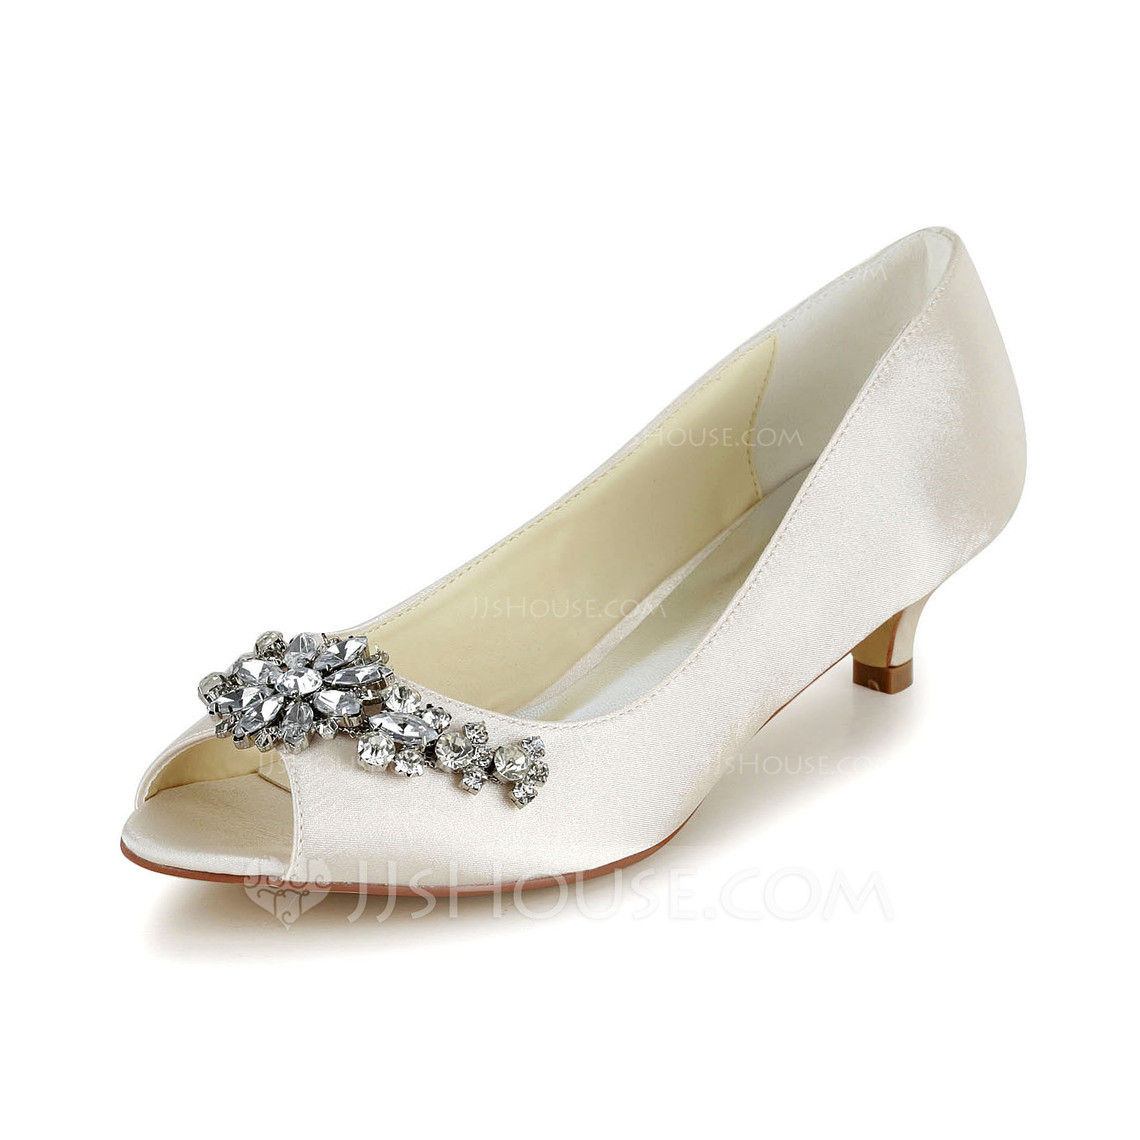 Jjshouse Wedding Shoes
 Women s Satin Cone Heel Peep Toe Sandals With Rhinestone